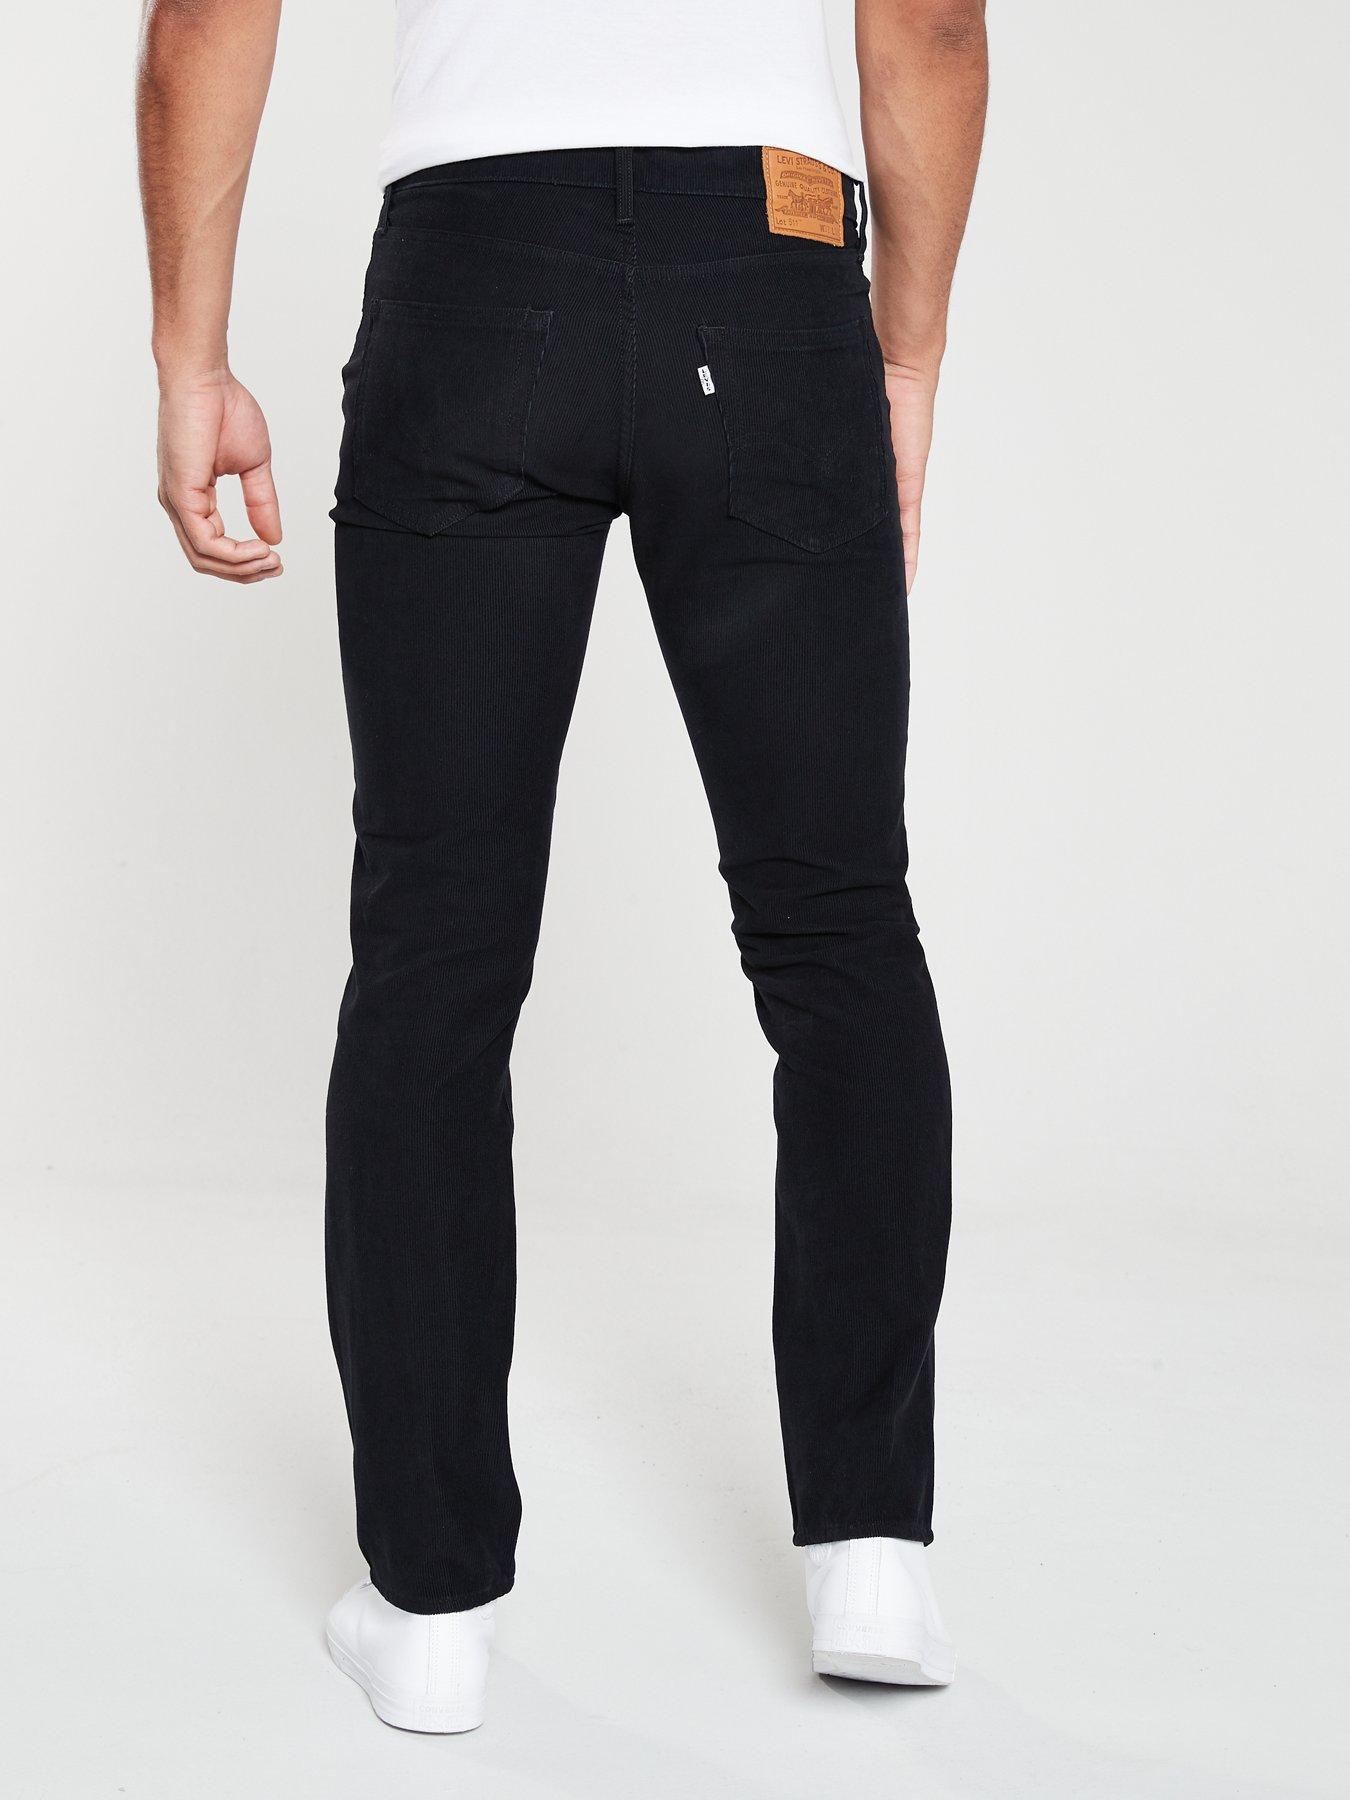 levi black corduroy jeans